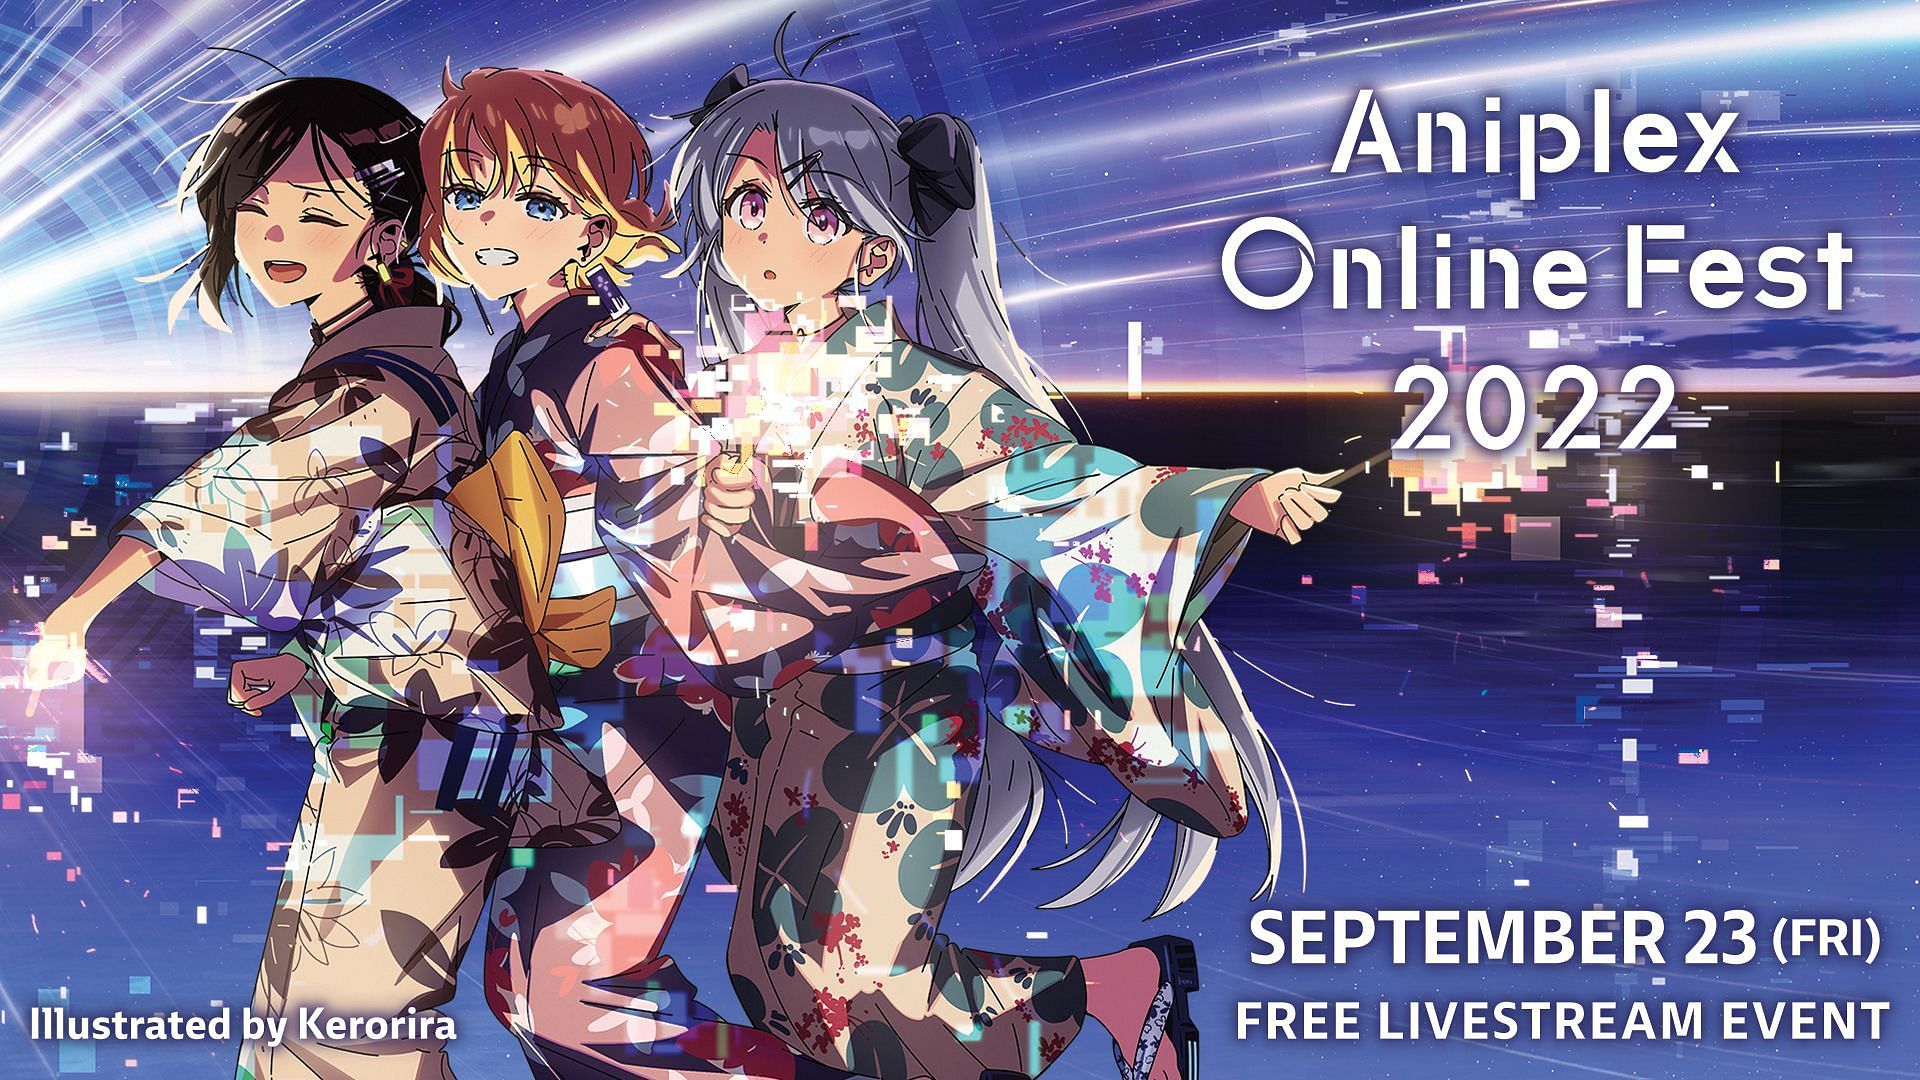 Aniplex Online Fest 2023 reveals event date and details